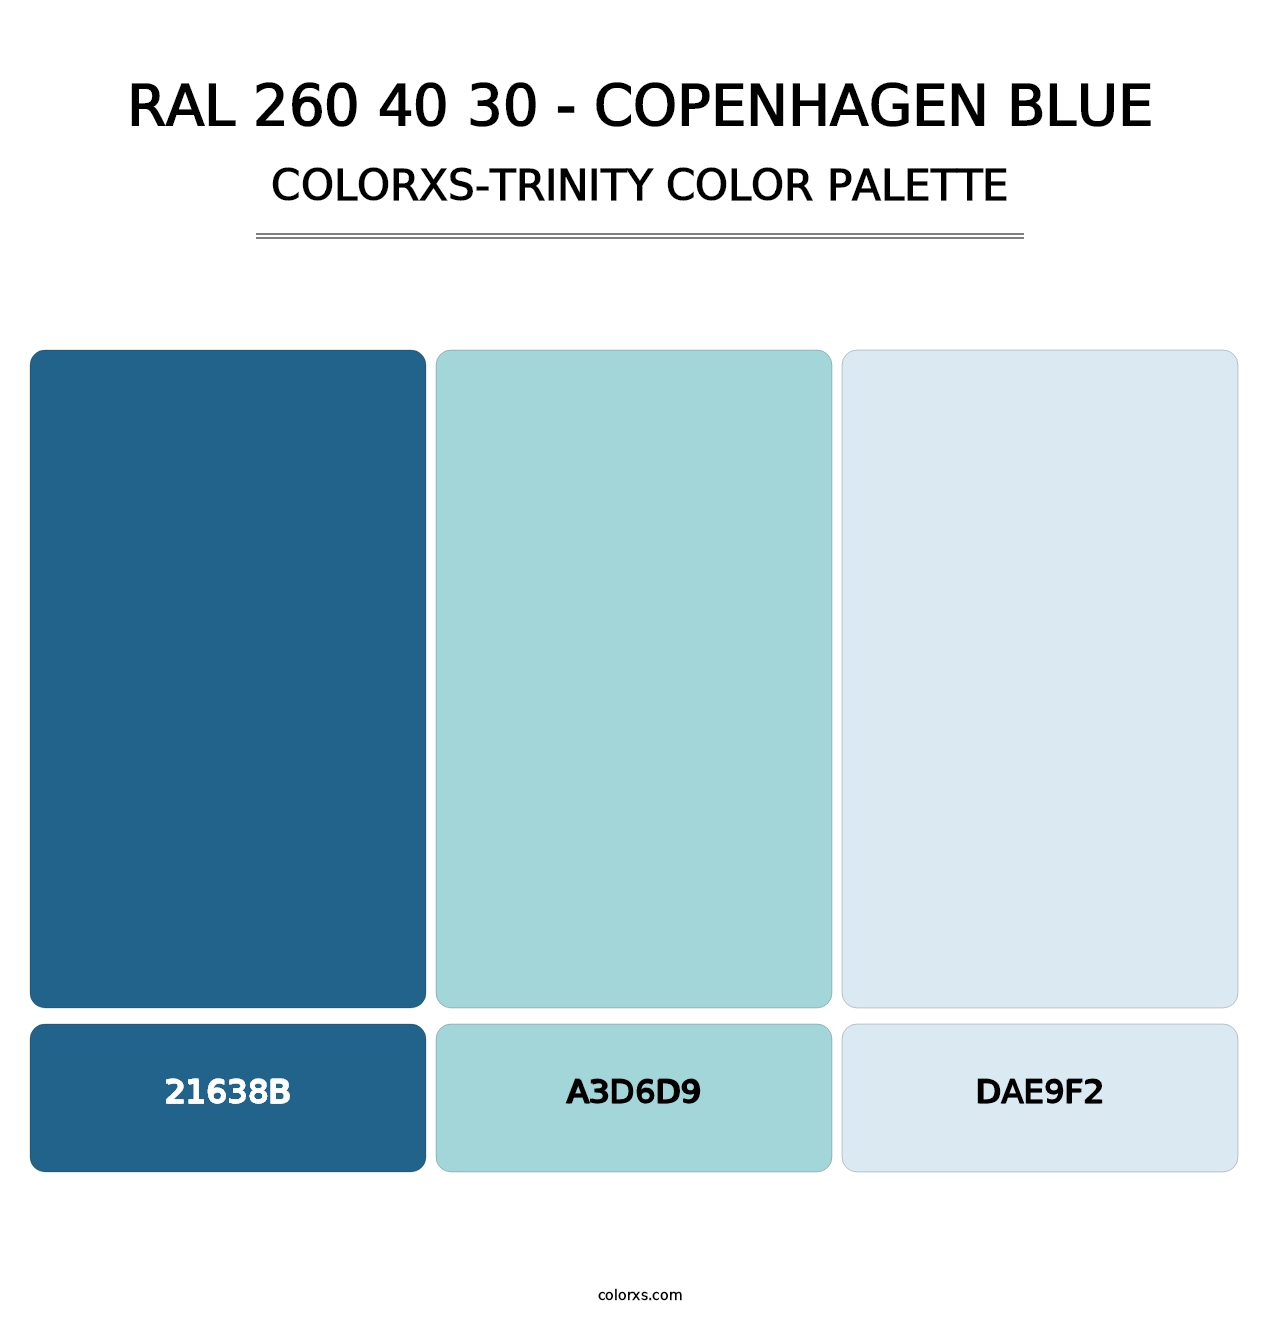 RAL 260 40 30 - Copenhagen Blue - Colorxs Trinity Palette